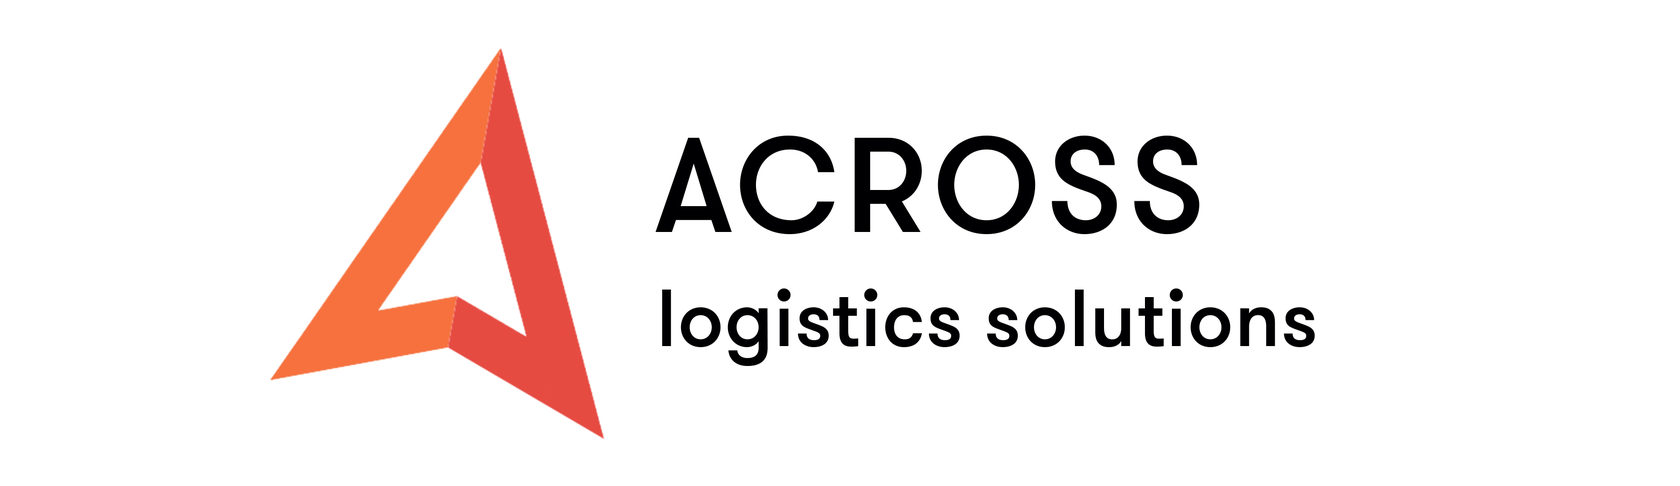 ACROSS Logistics